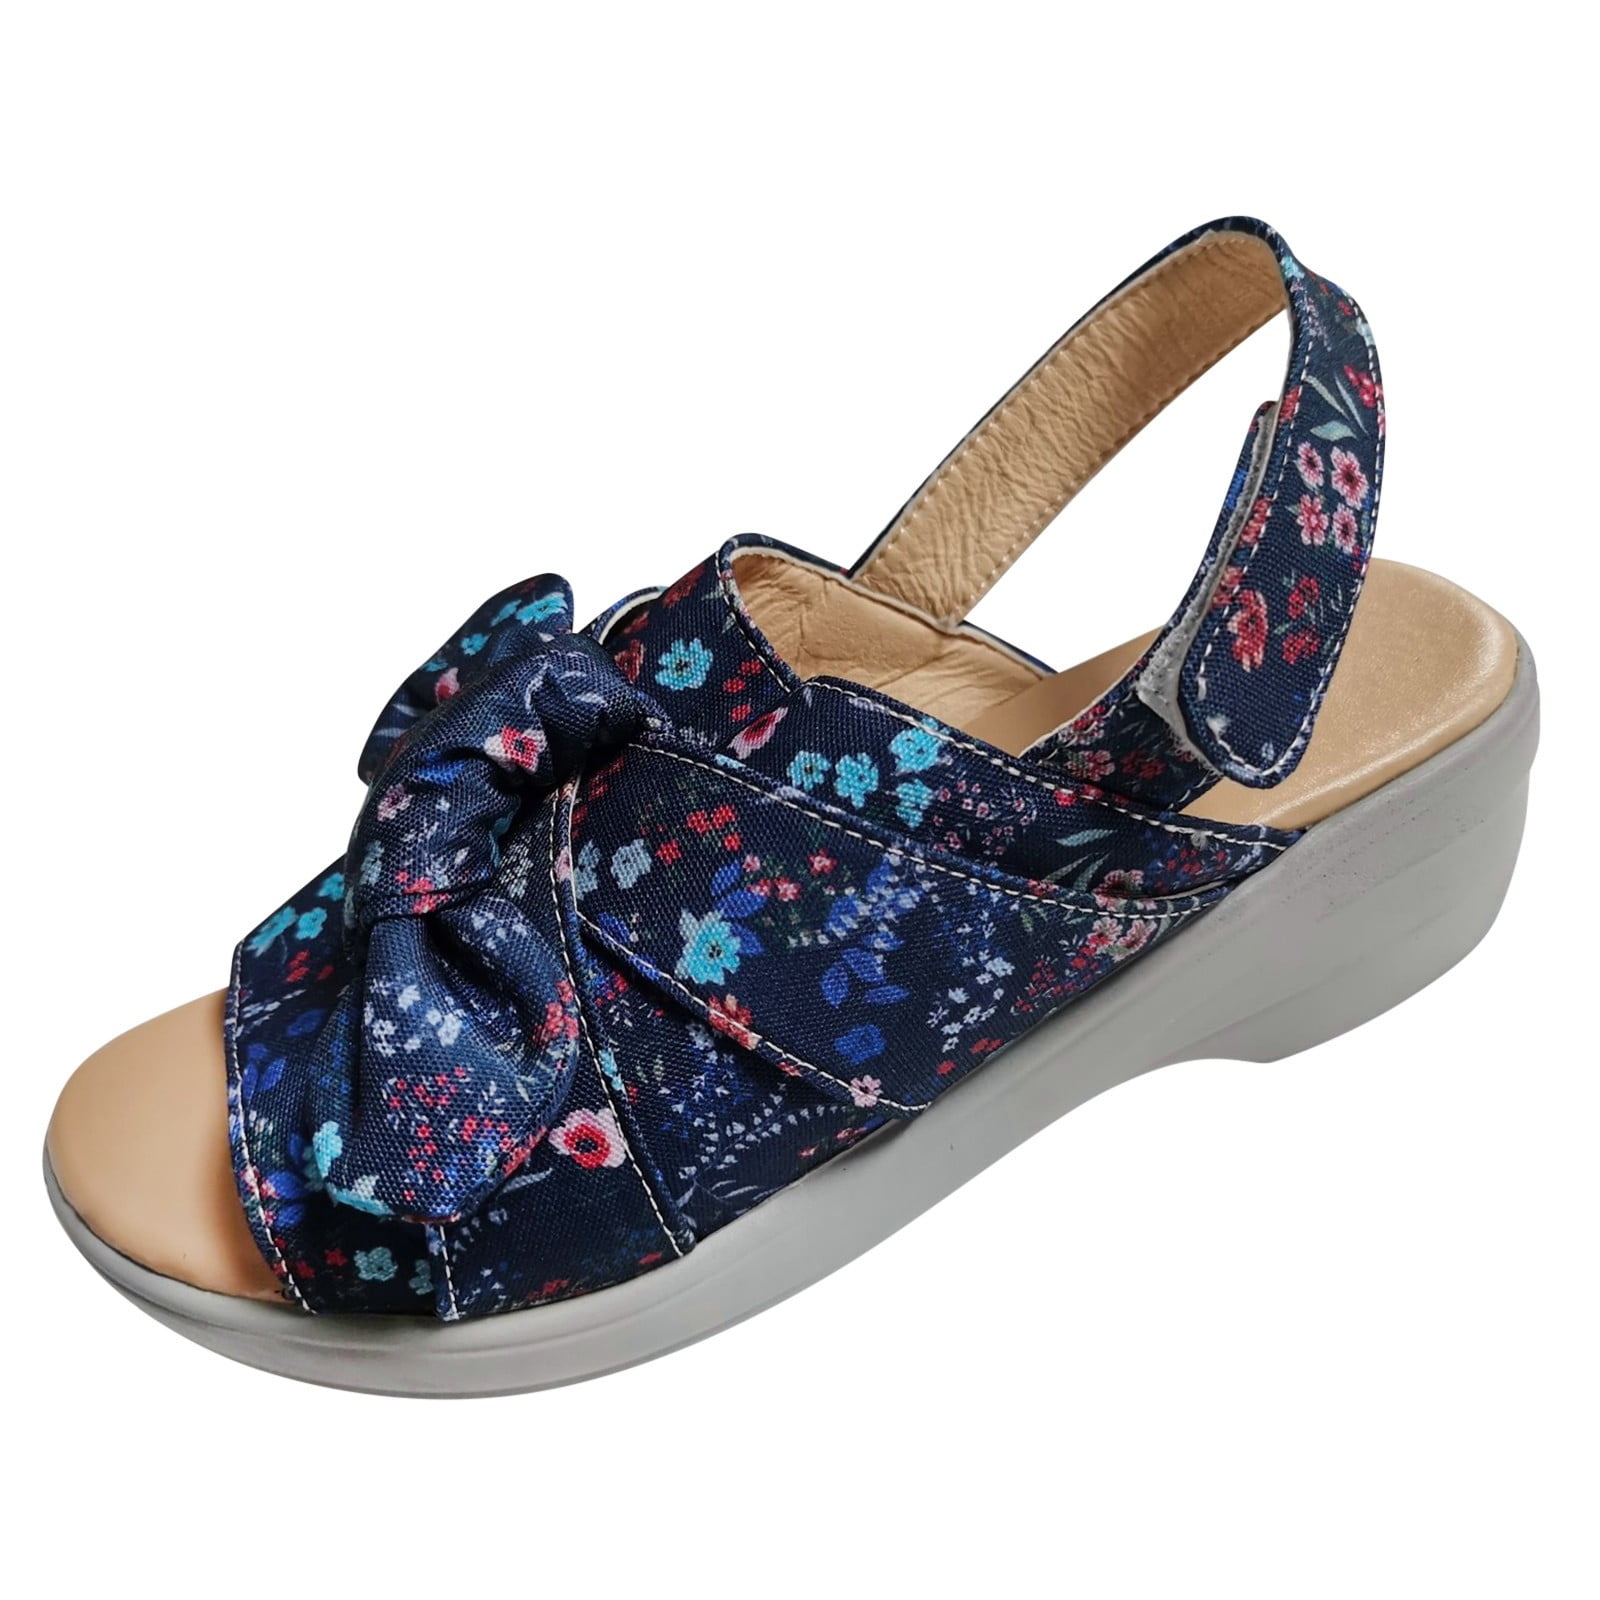 adviicd Platform Sandals for Womens Summer Sandals Shoes Womens Knot ...